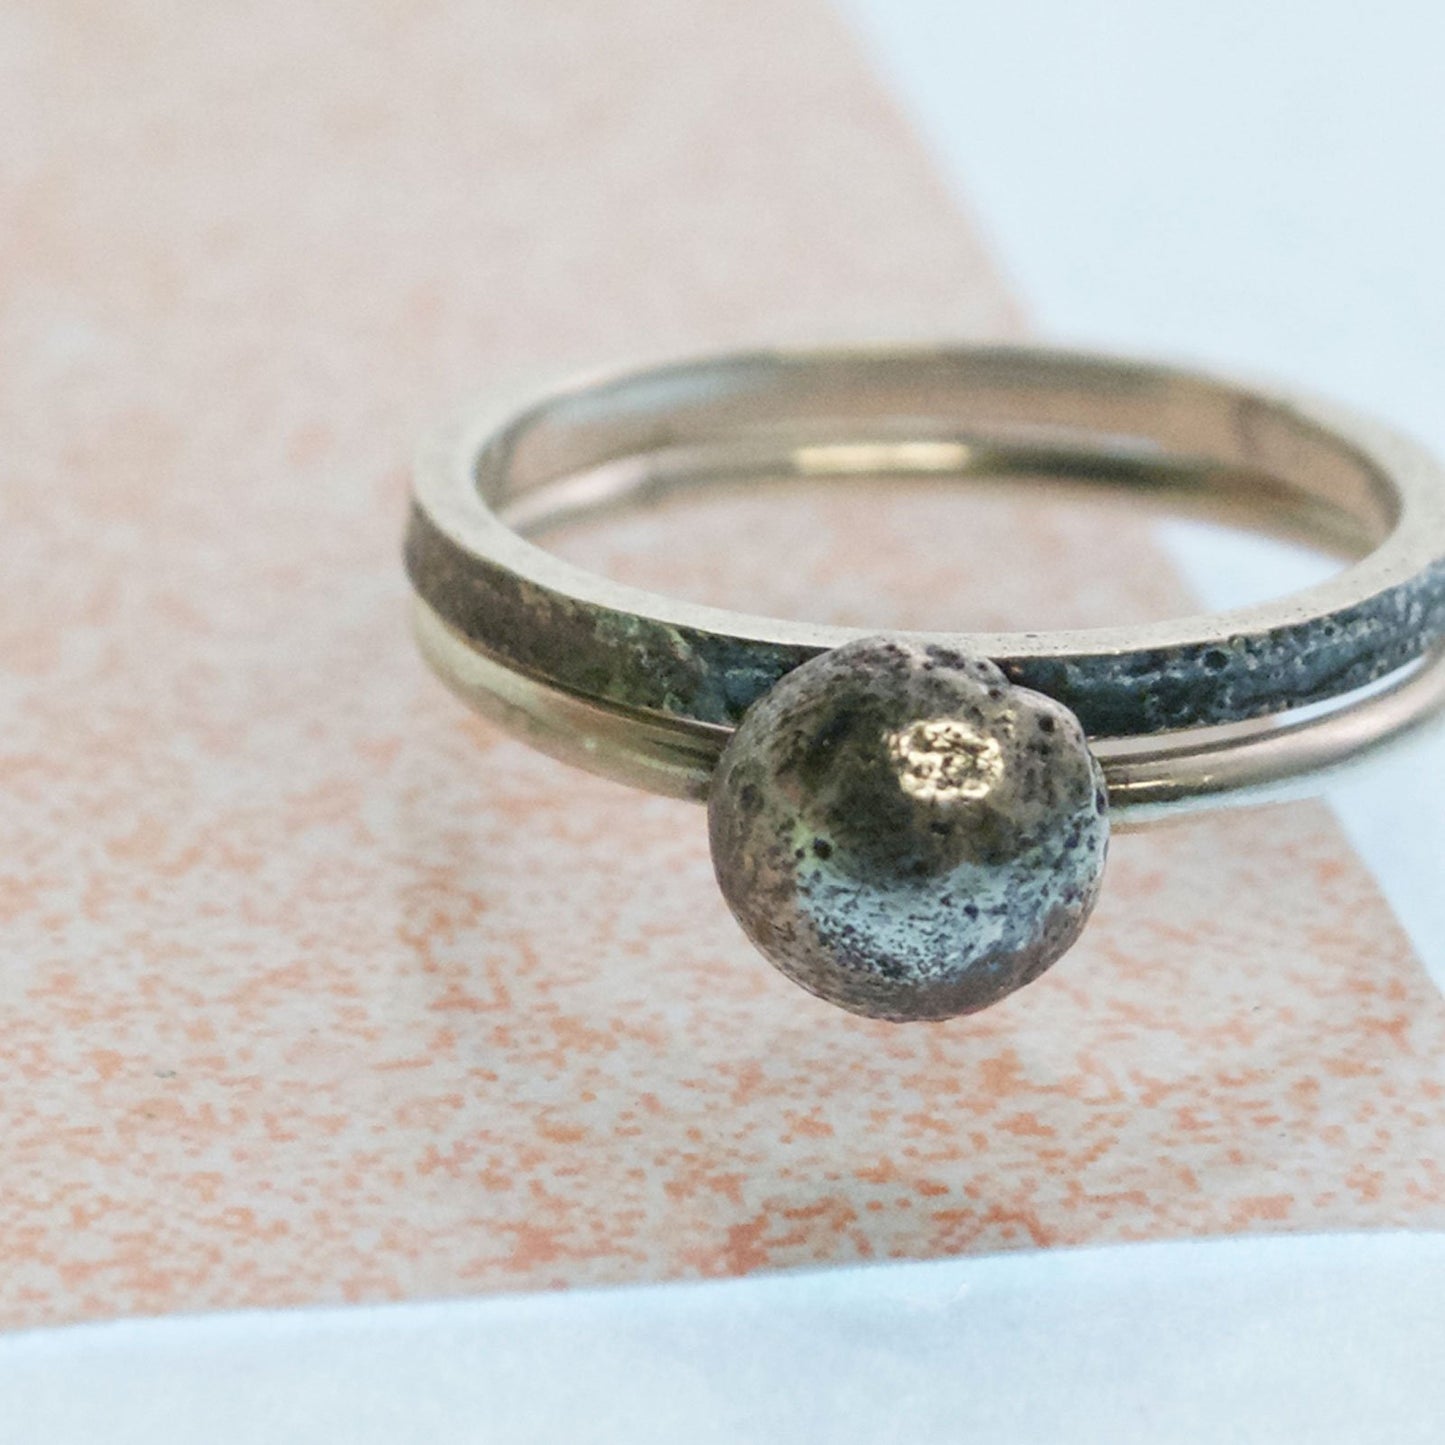 Small Moonrock Ring - Silver